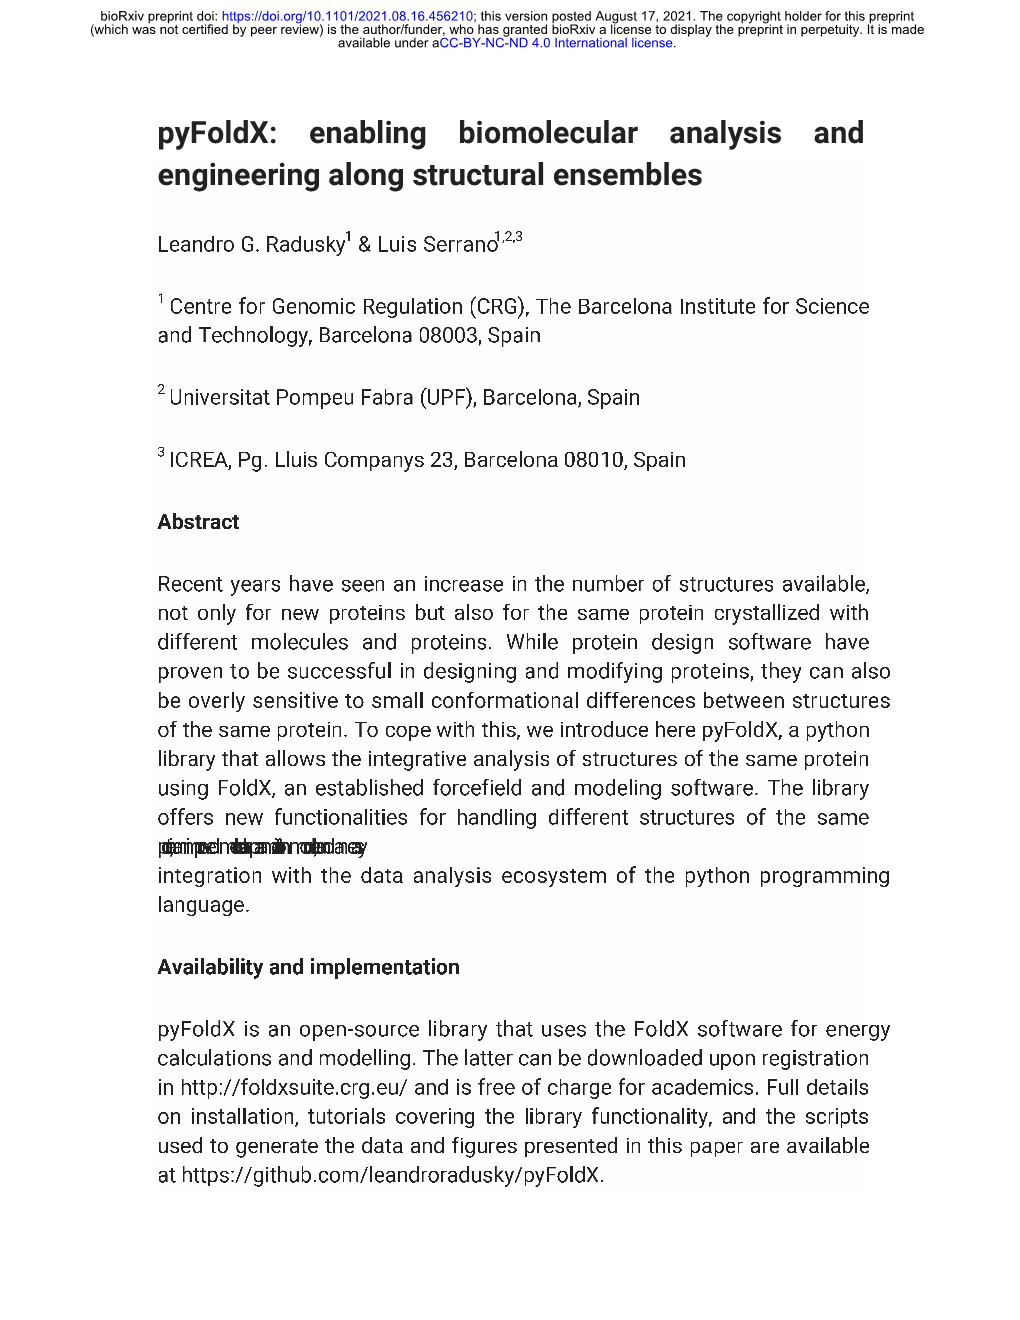 Enabling Biomolecular Analysis and Engineering Along Structural Ensembles